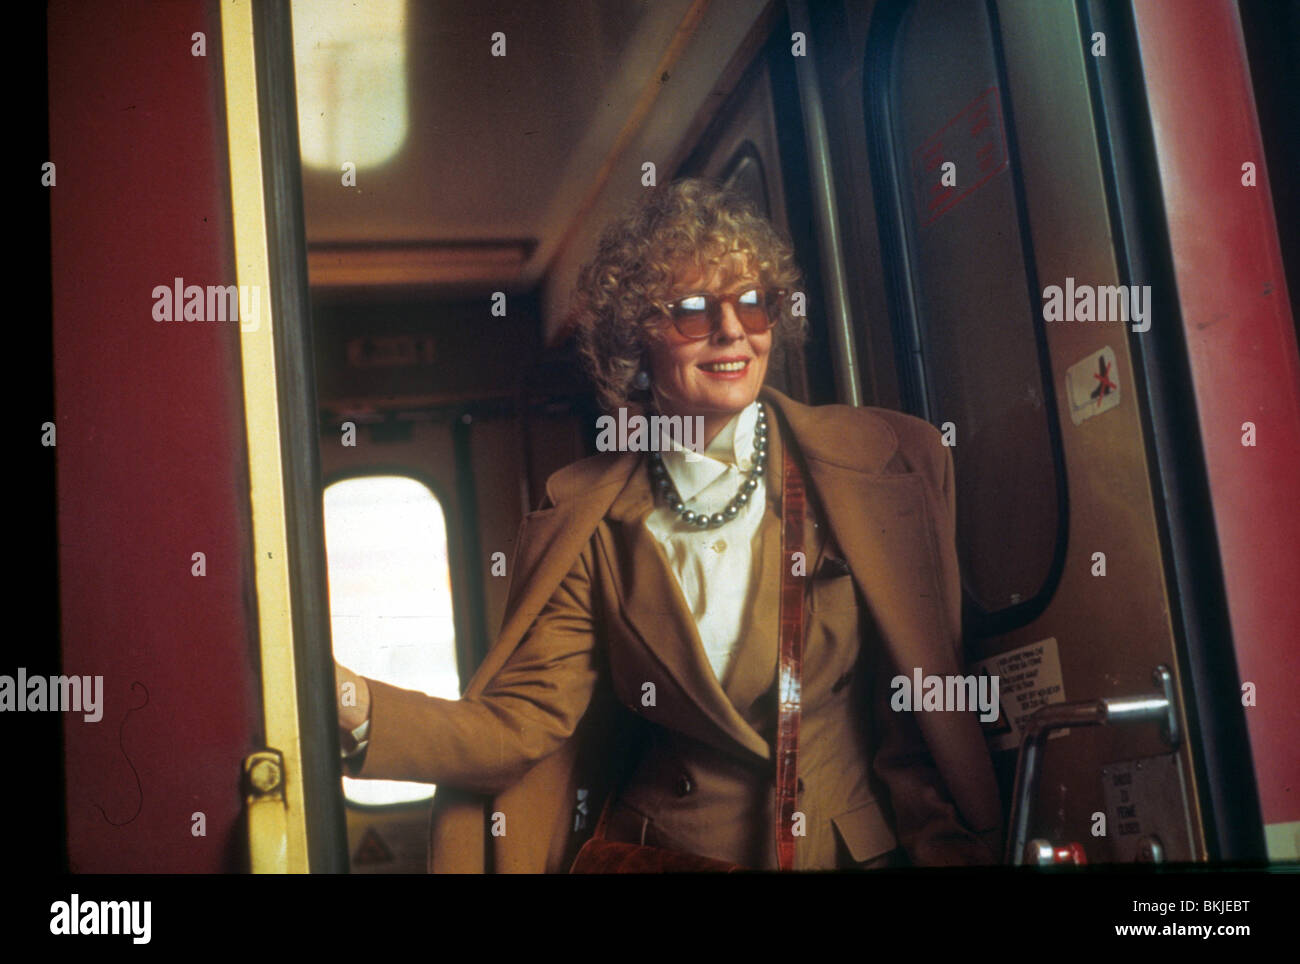 El maravilloso vestuario de Diane Keaton en la saga 'El Padrino' merece un  homenaje